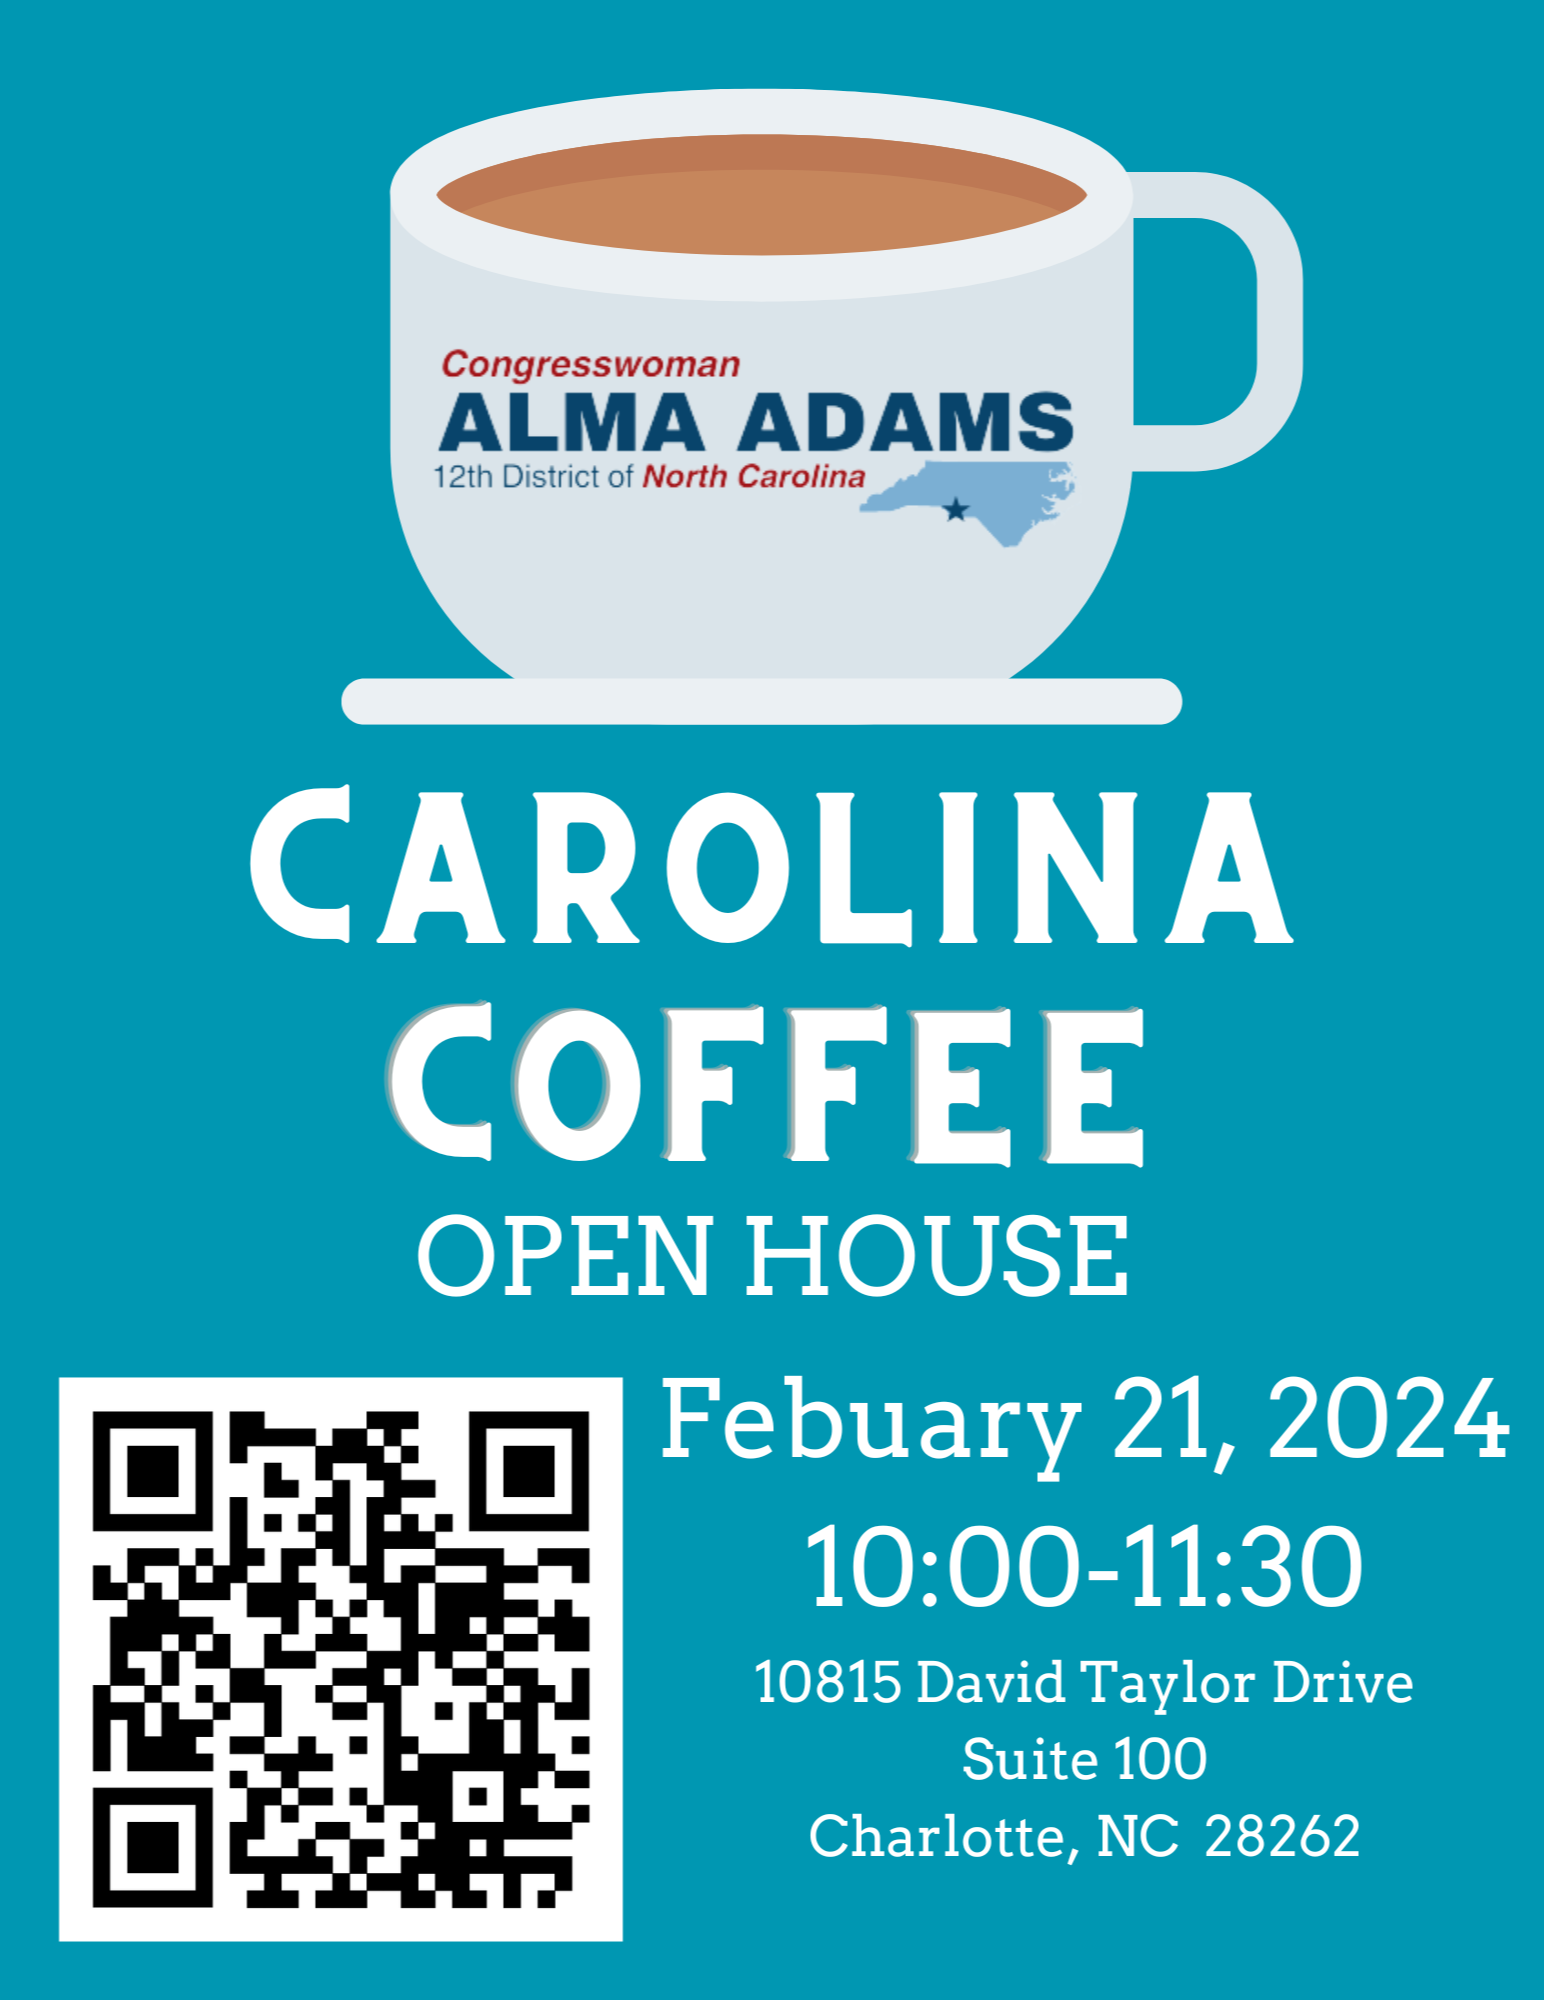 Carolina Coffee invite